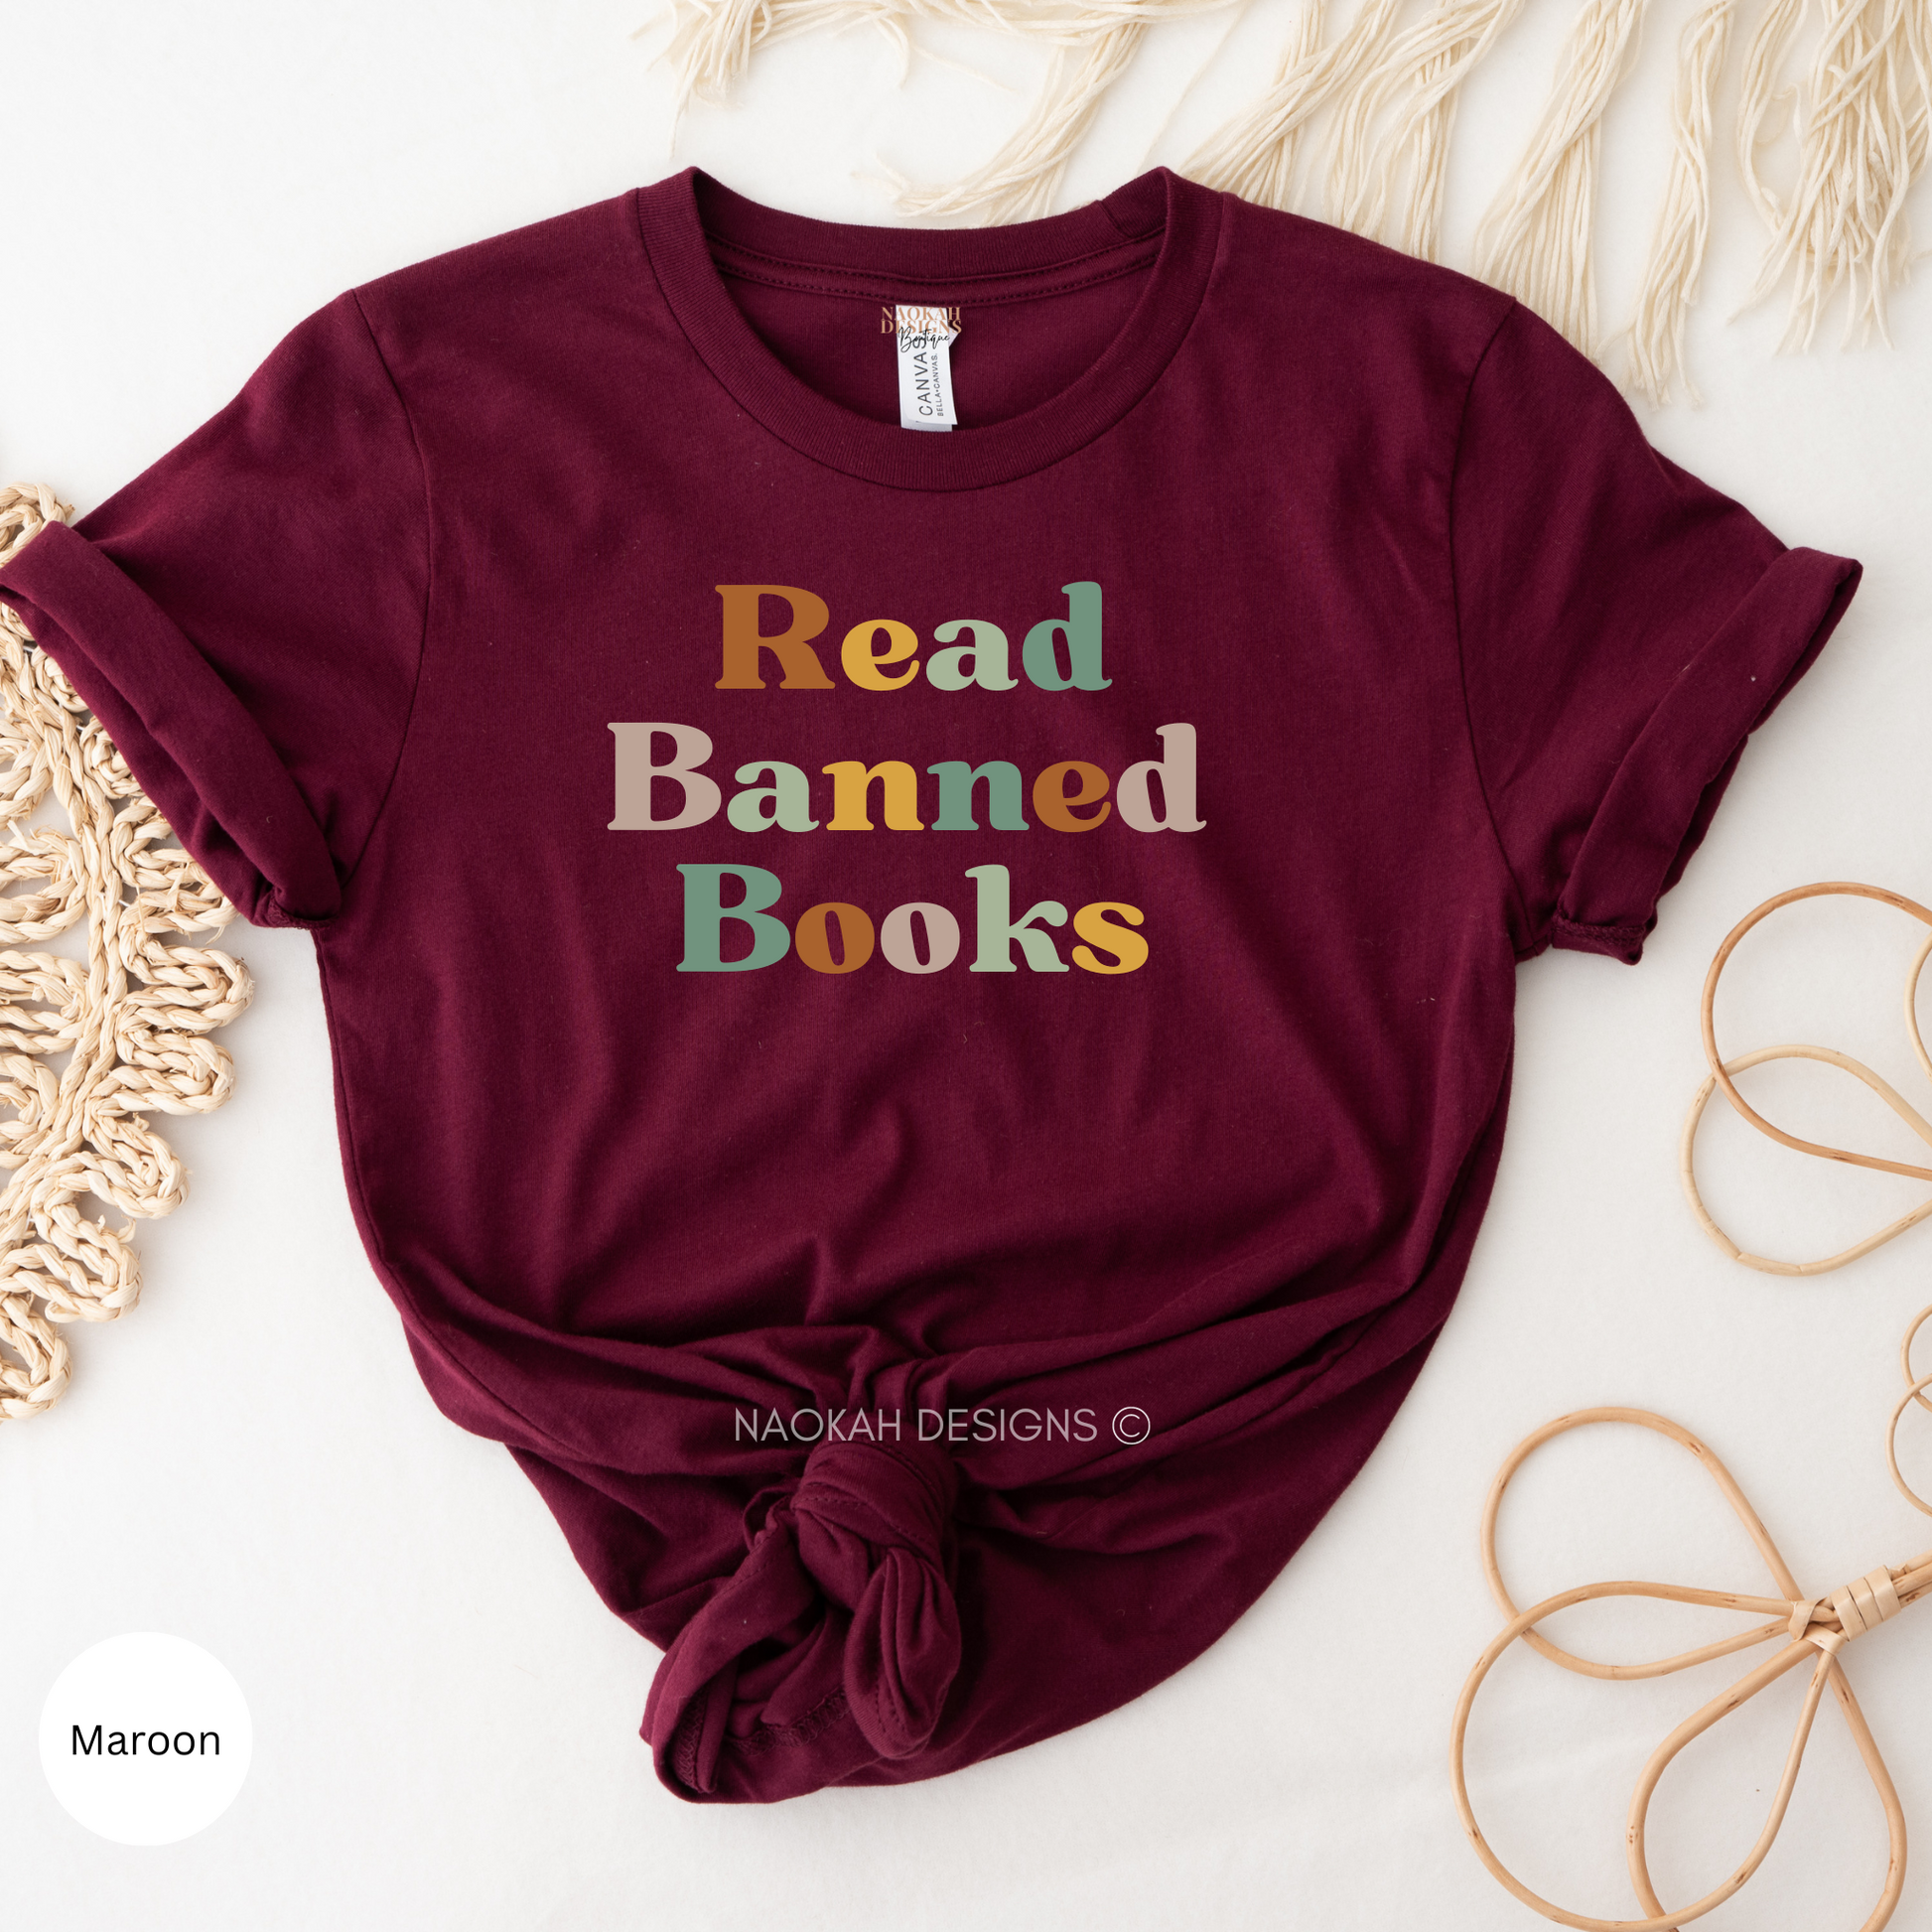 Read Banned Books Shirt, Librarian Shirt, Book Club Shirt, Bookish Shirt, Try Reading Book Instead Of Banning Them, Literature Shirt